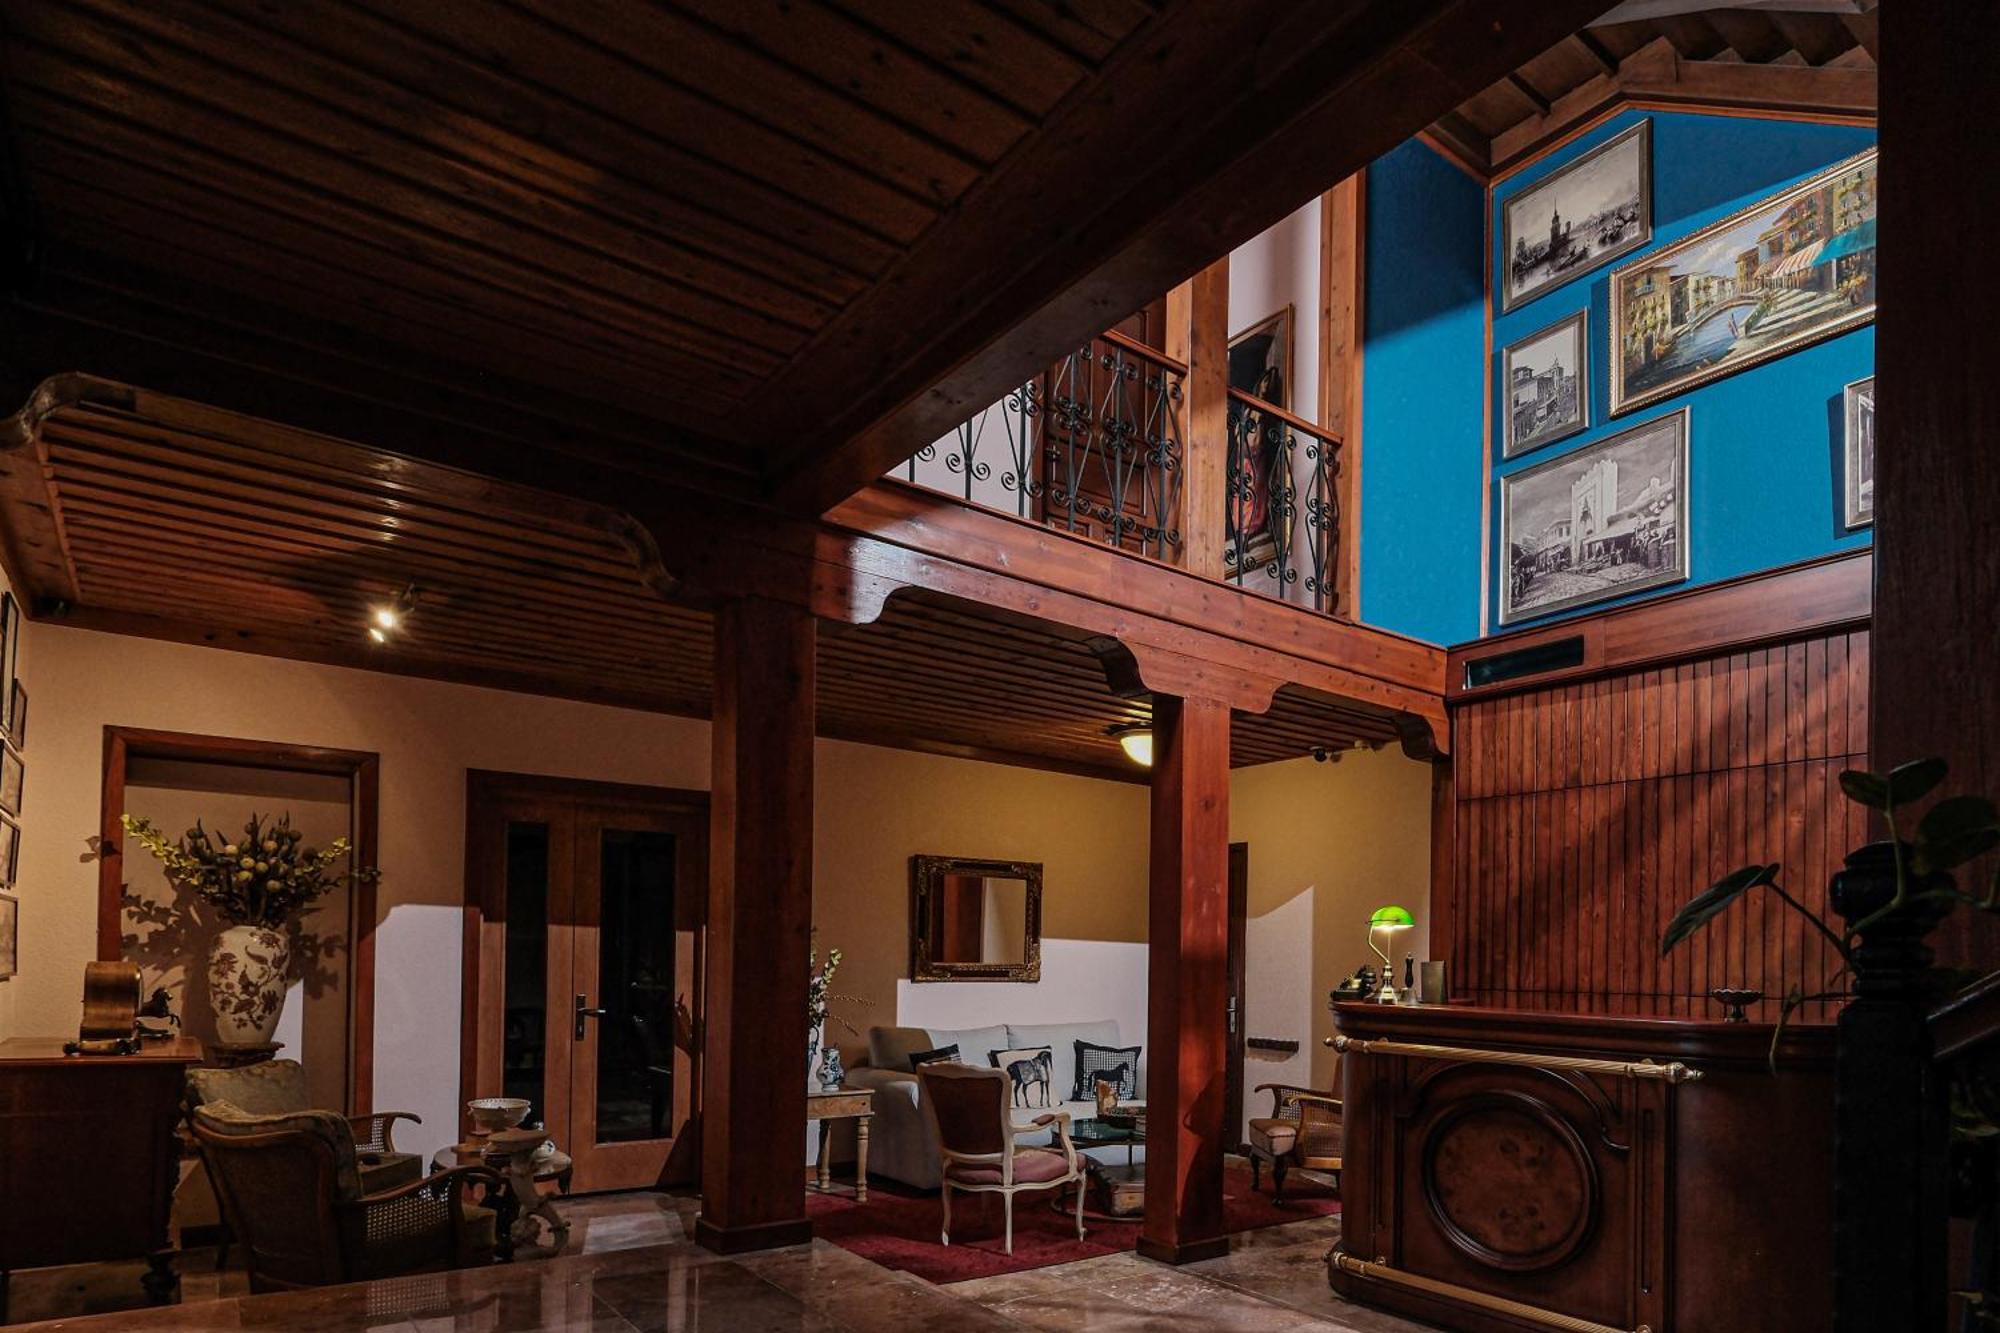 Hotel Bosnali Adana Exterior photo